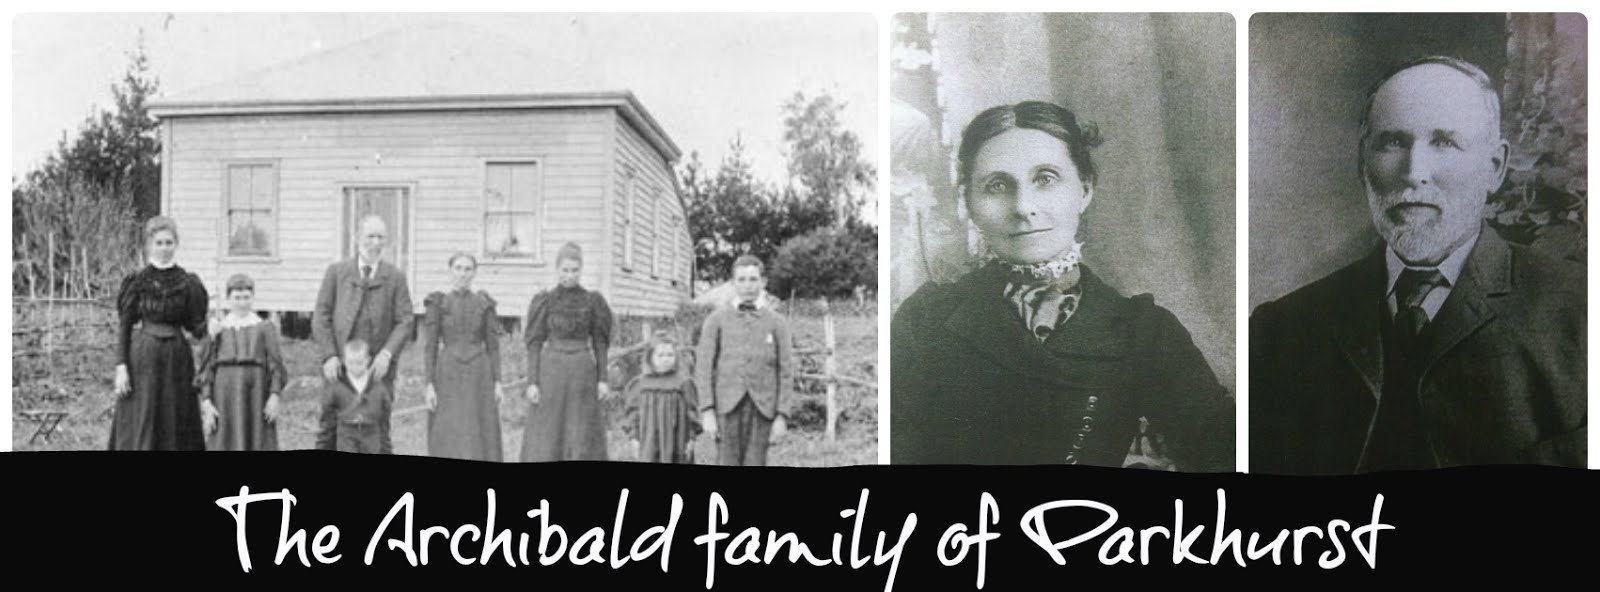 The Archibald family of Parkhurst